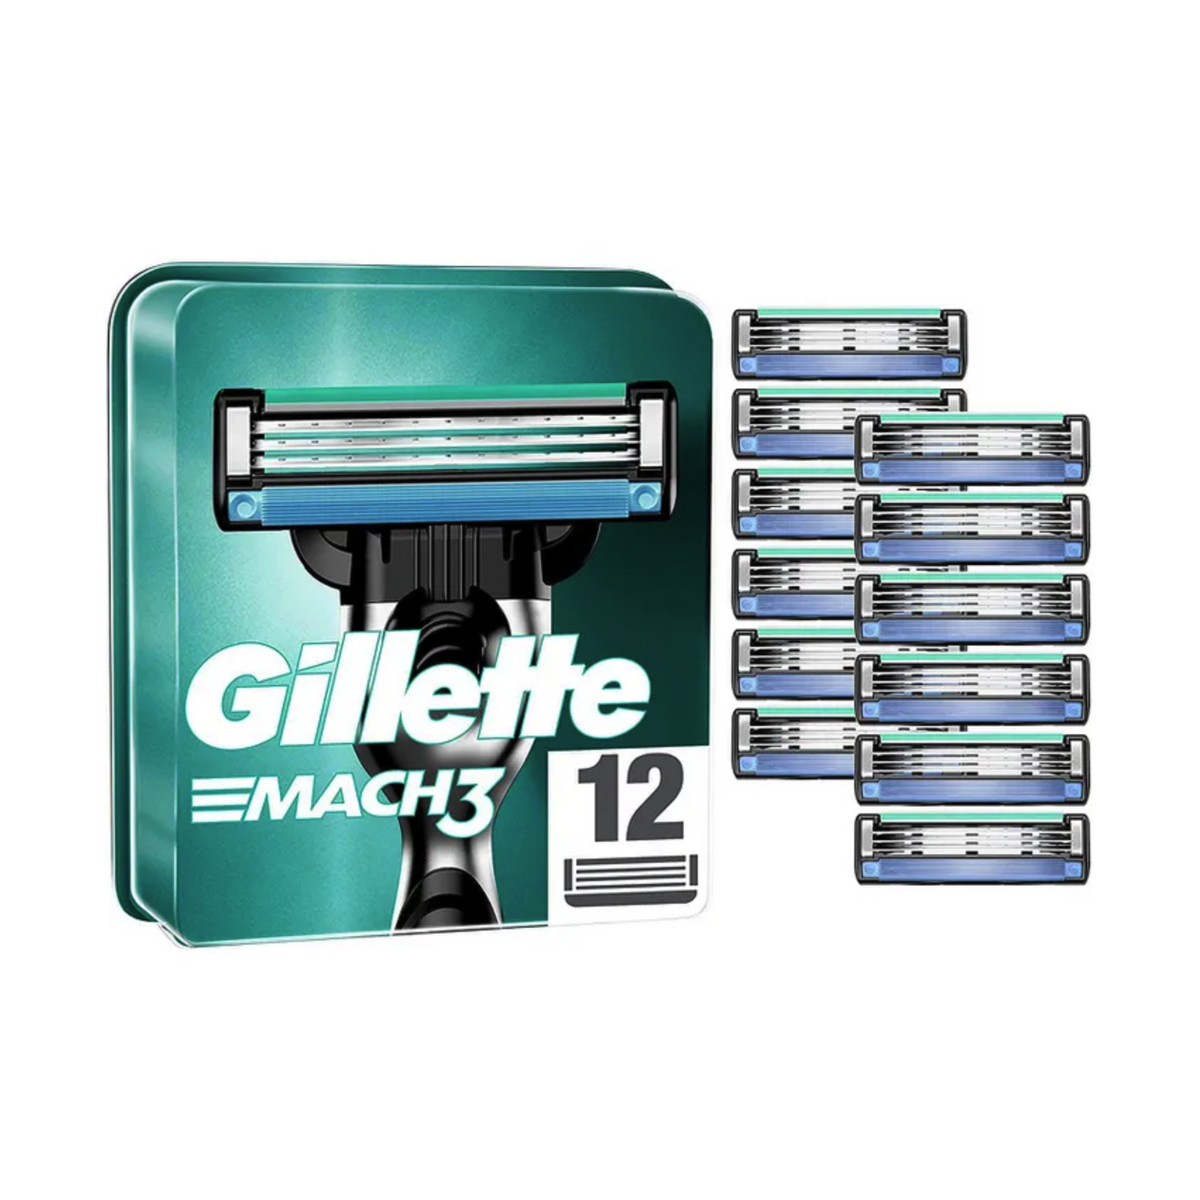 Gillette Mach 3 Cartridges 12's